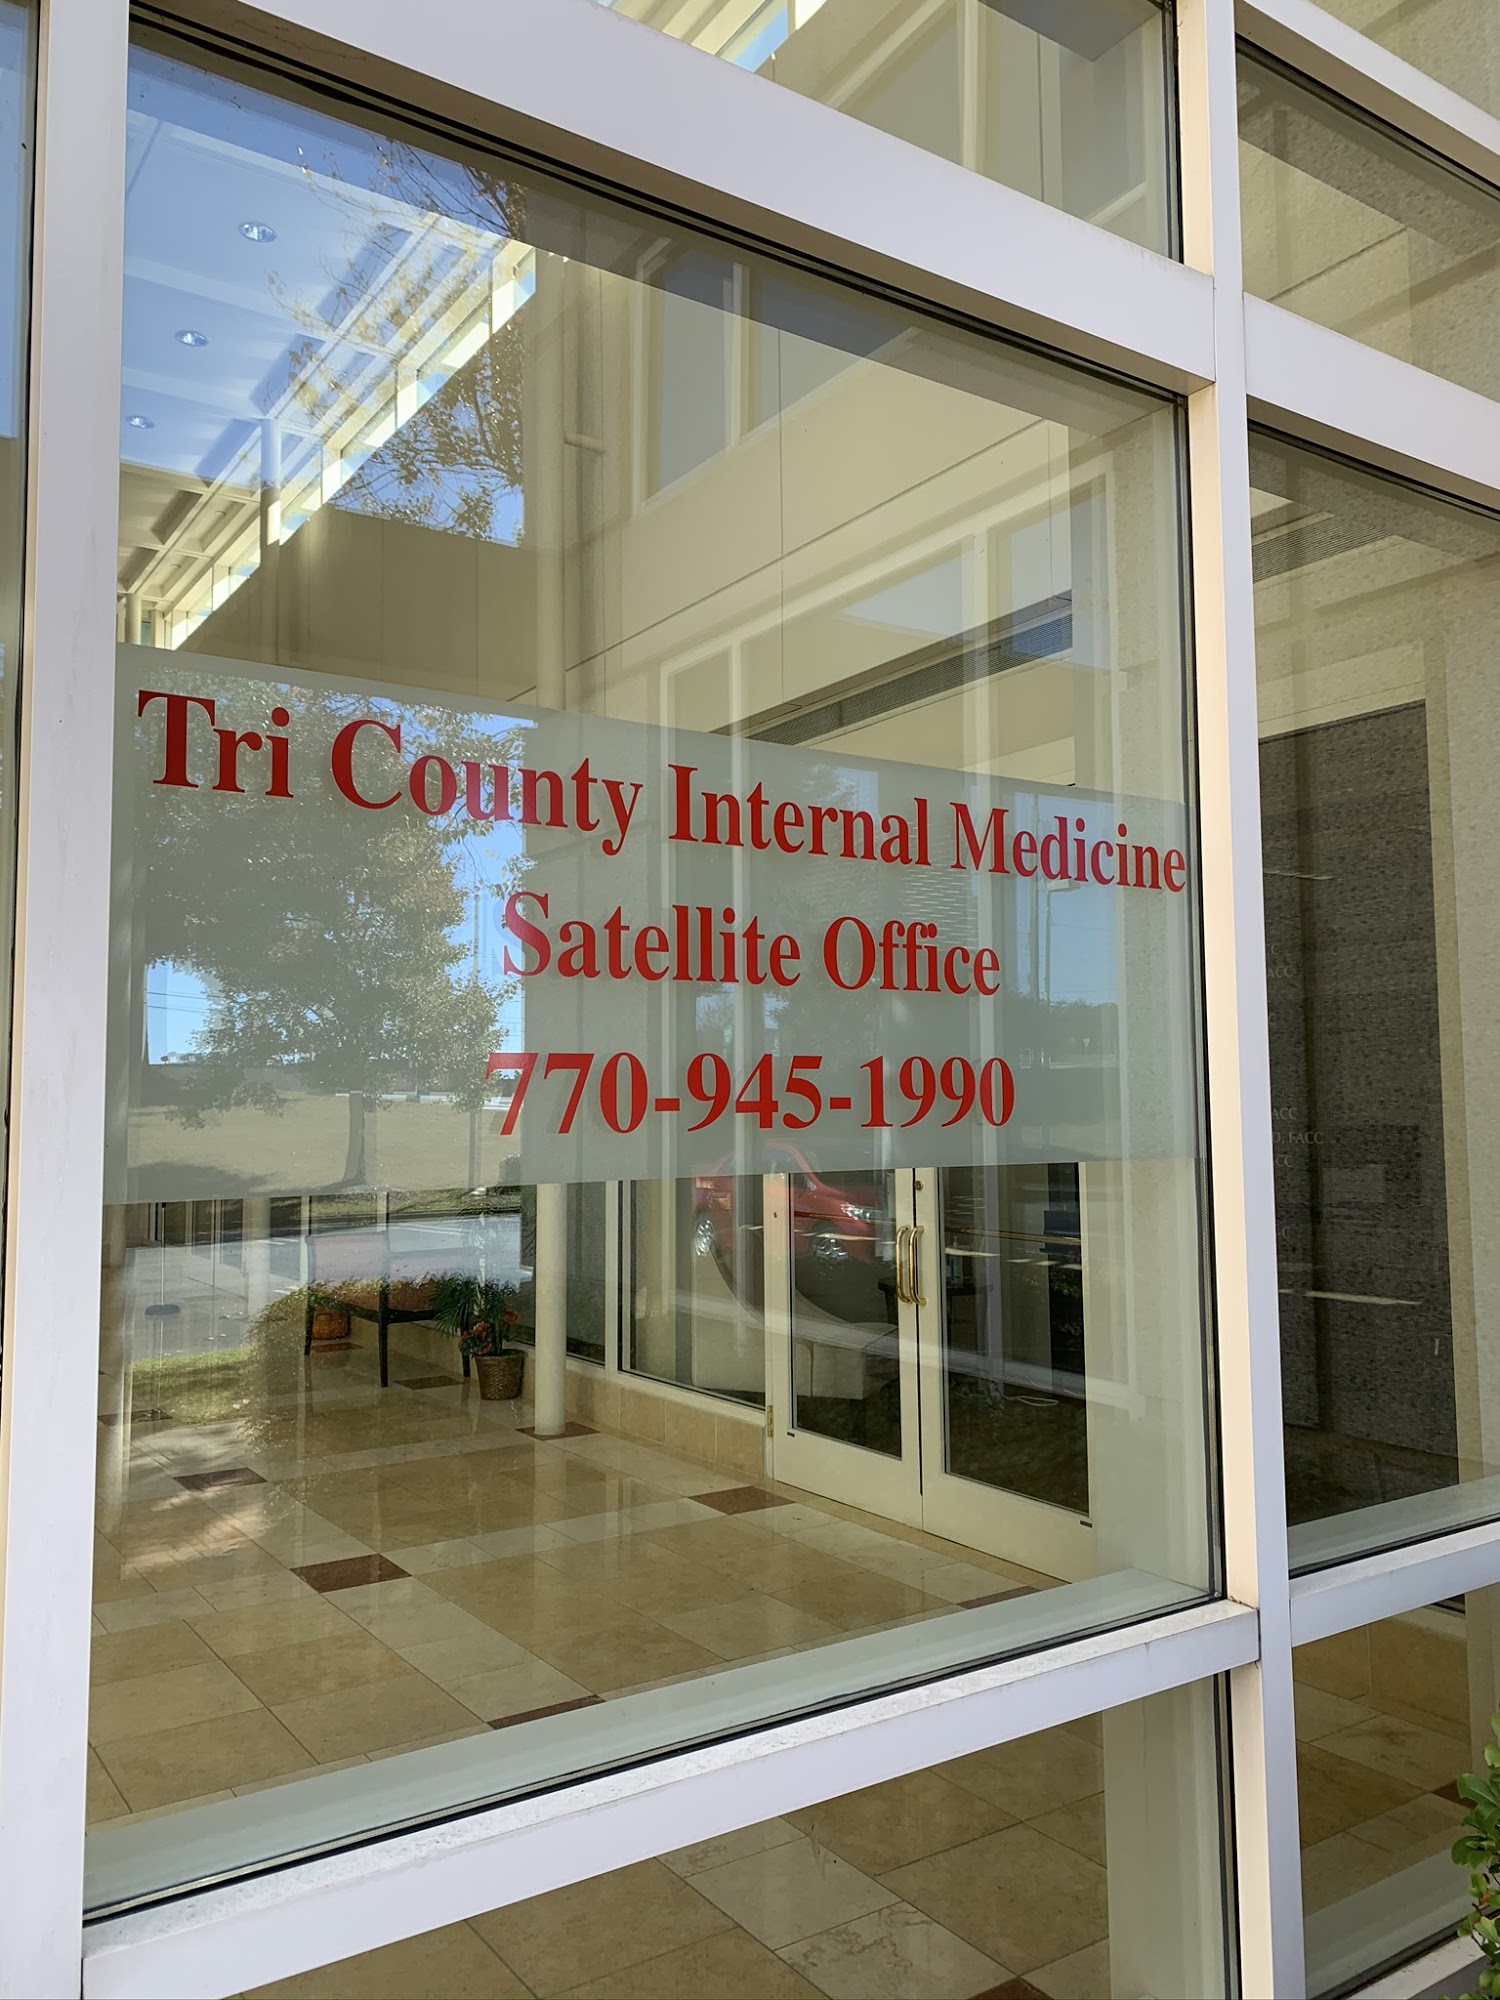 Tri County Internal Medicine (Satellite Office)